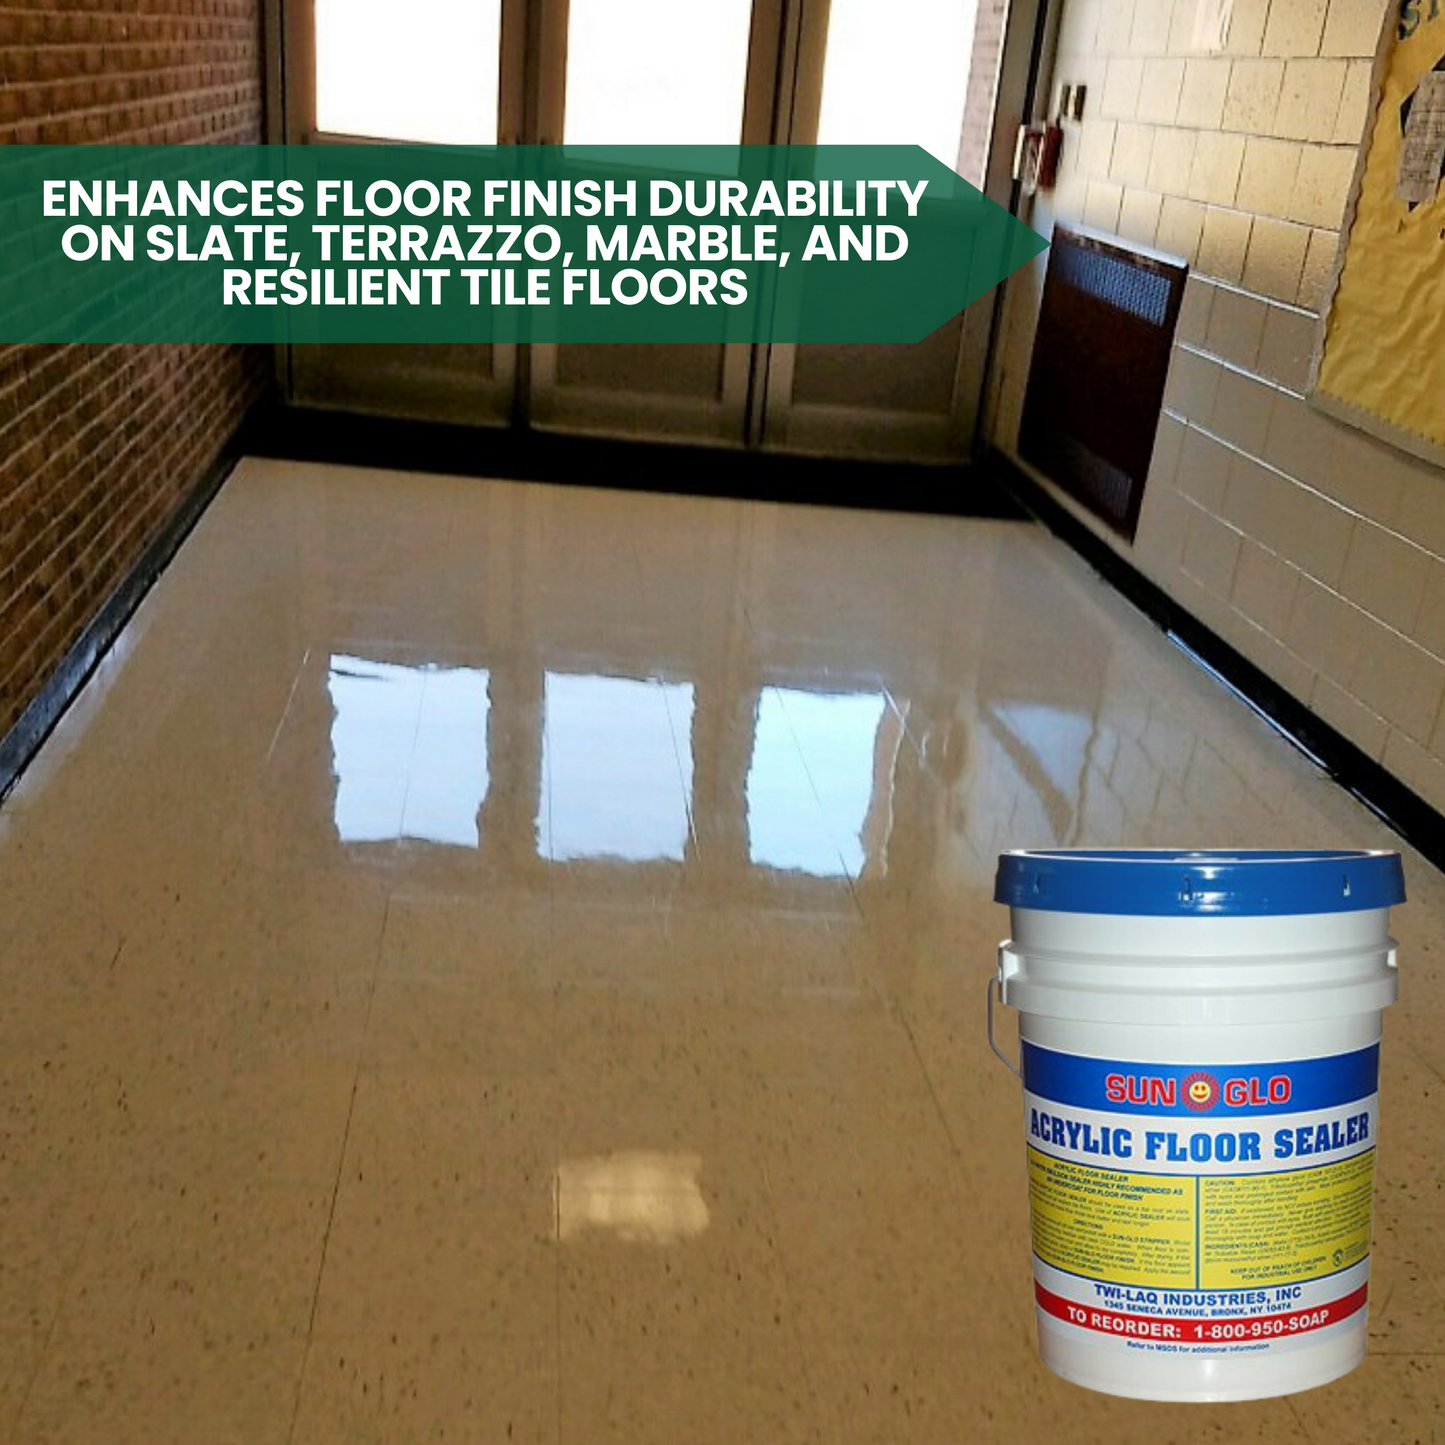 SUN-GLO Acrylic Floor Sealer - Floor Marble, Terrazzo, Resilient Tile Cleaner, Floor Finish, Enhance Durability - 5 Gallons Pail